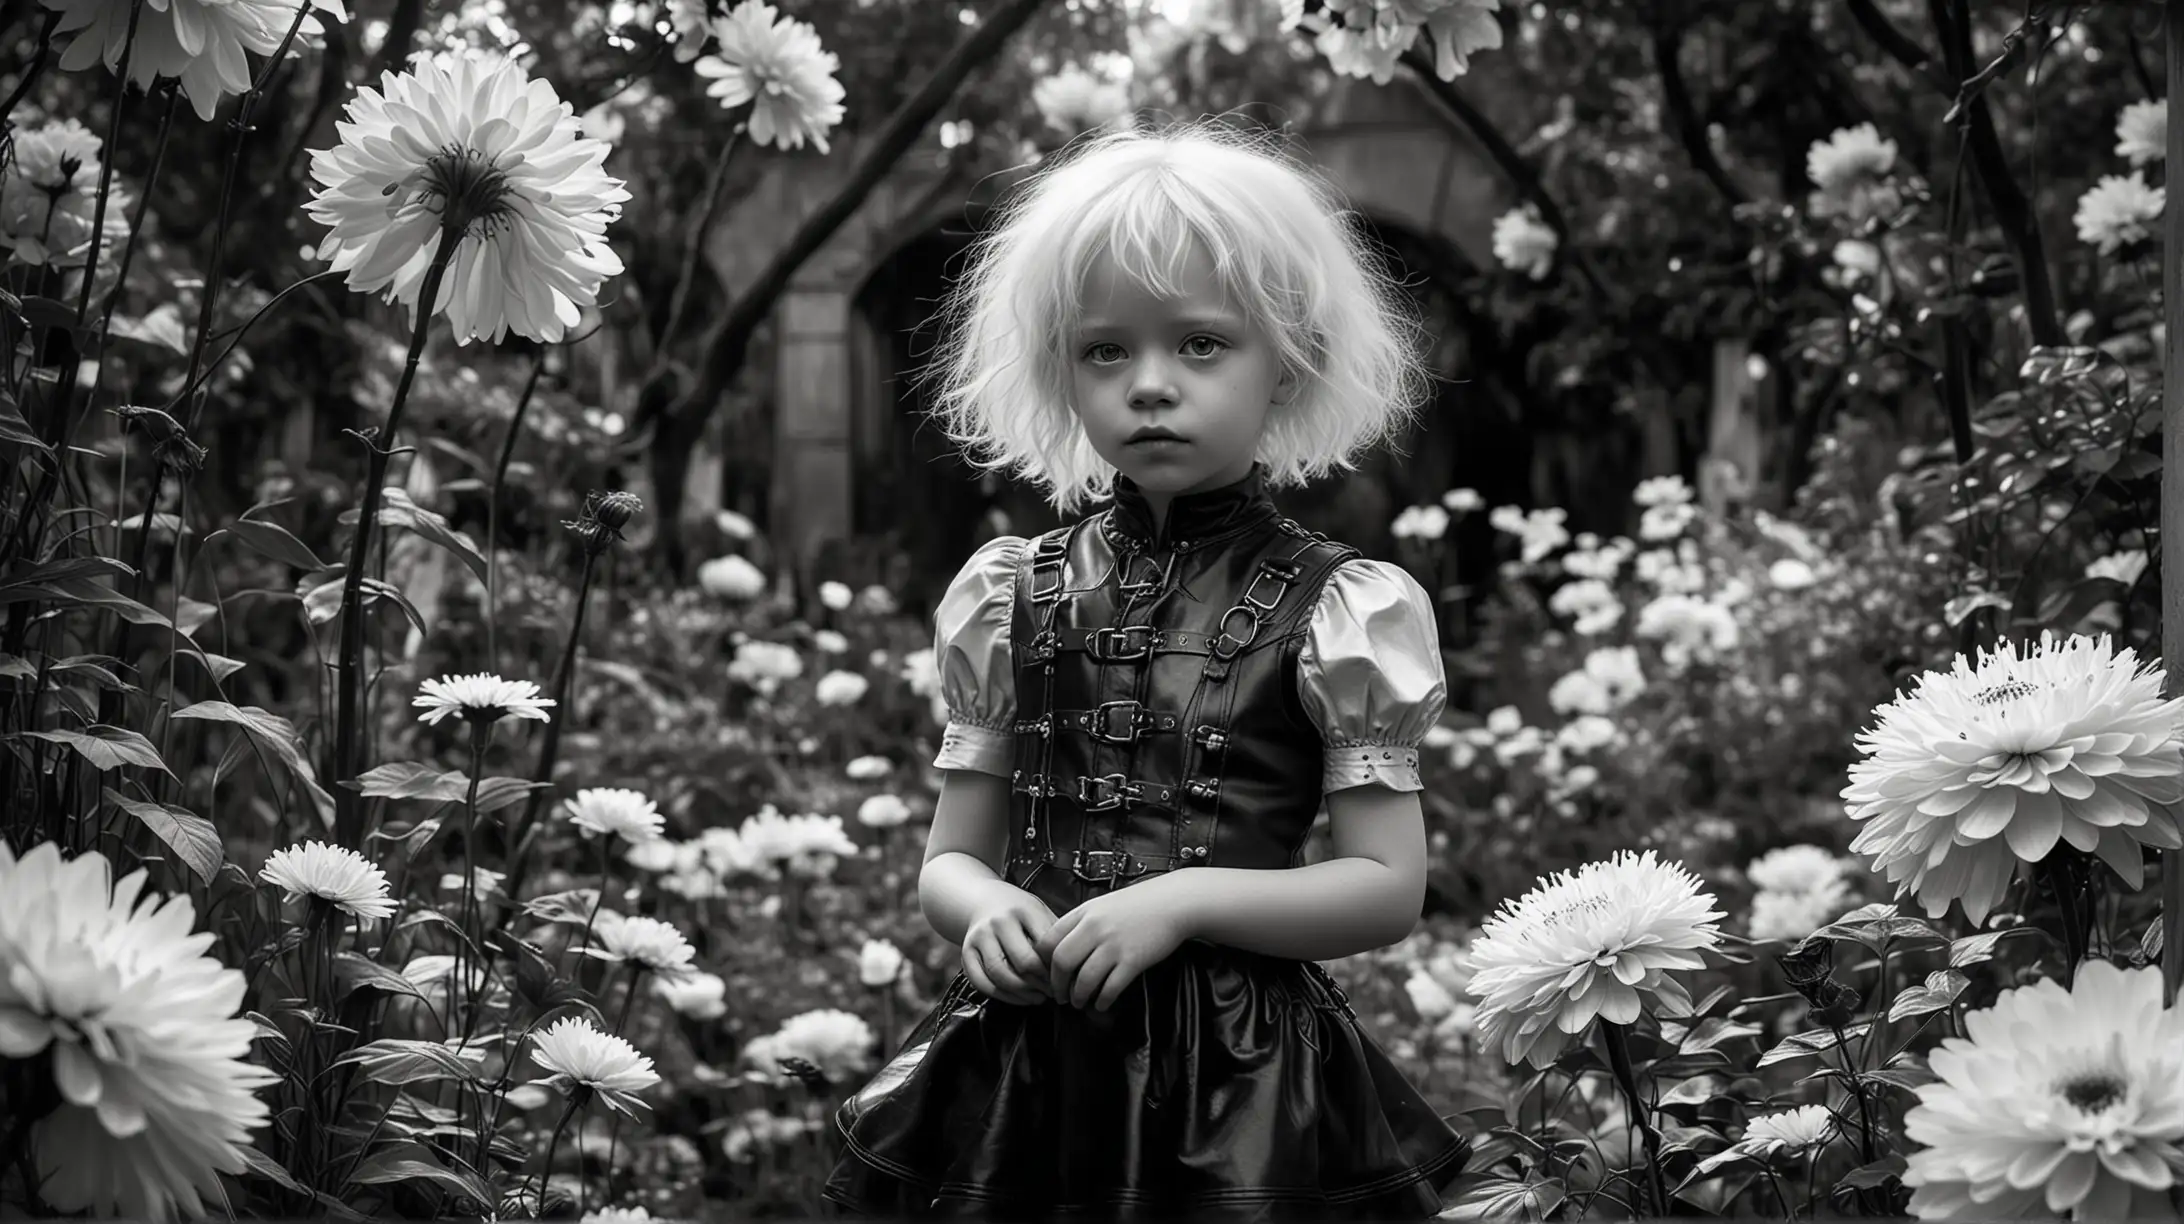 Steampunk Albino Child in Neon Leather Dress Exploring Gothic Garden